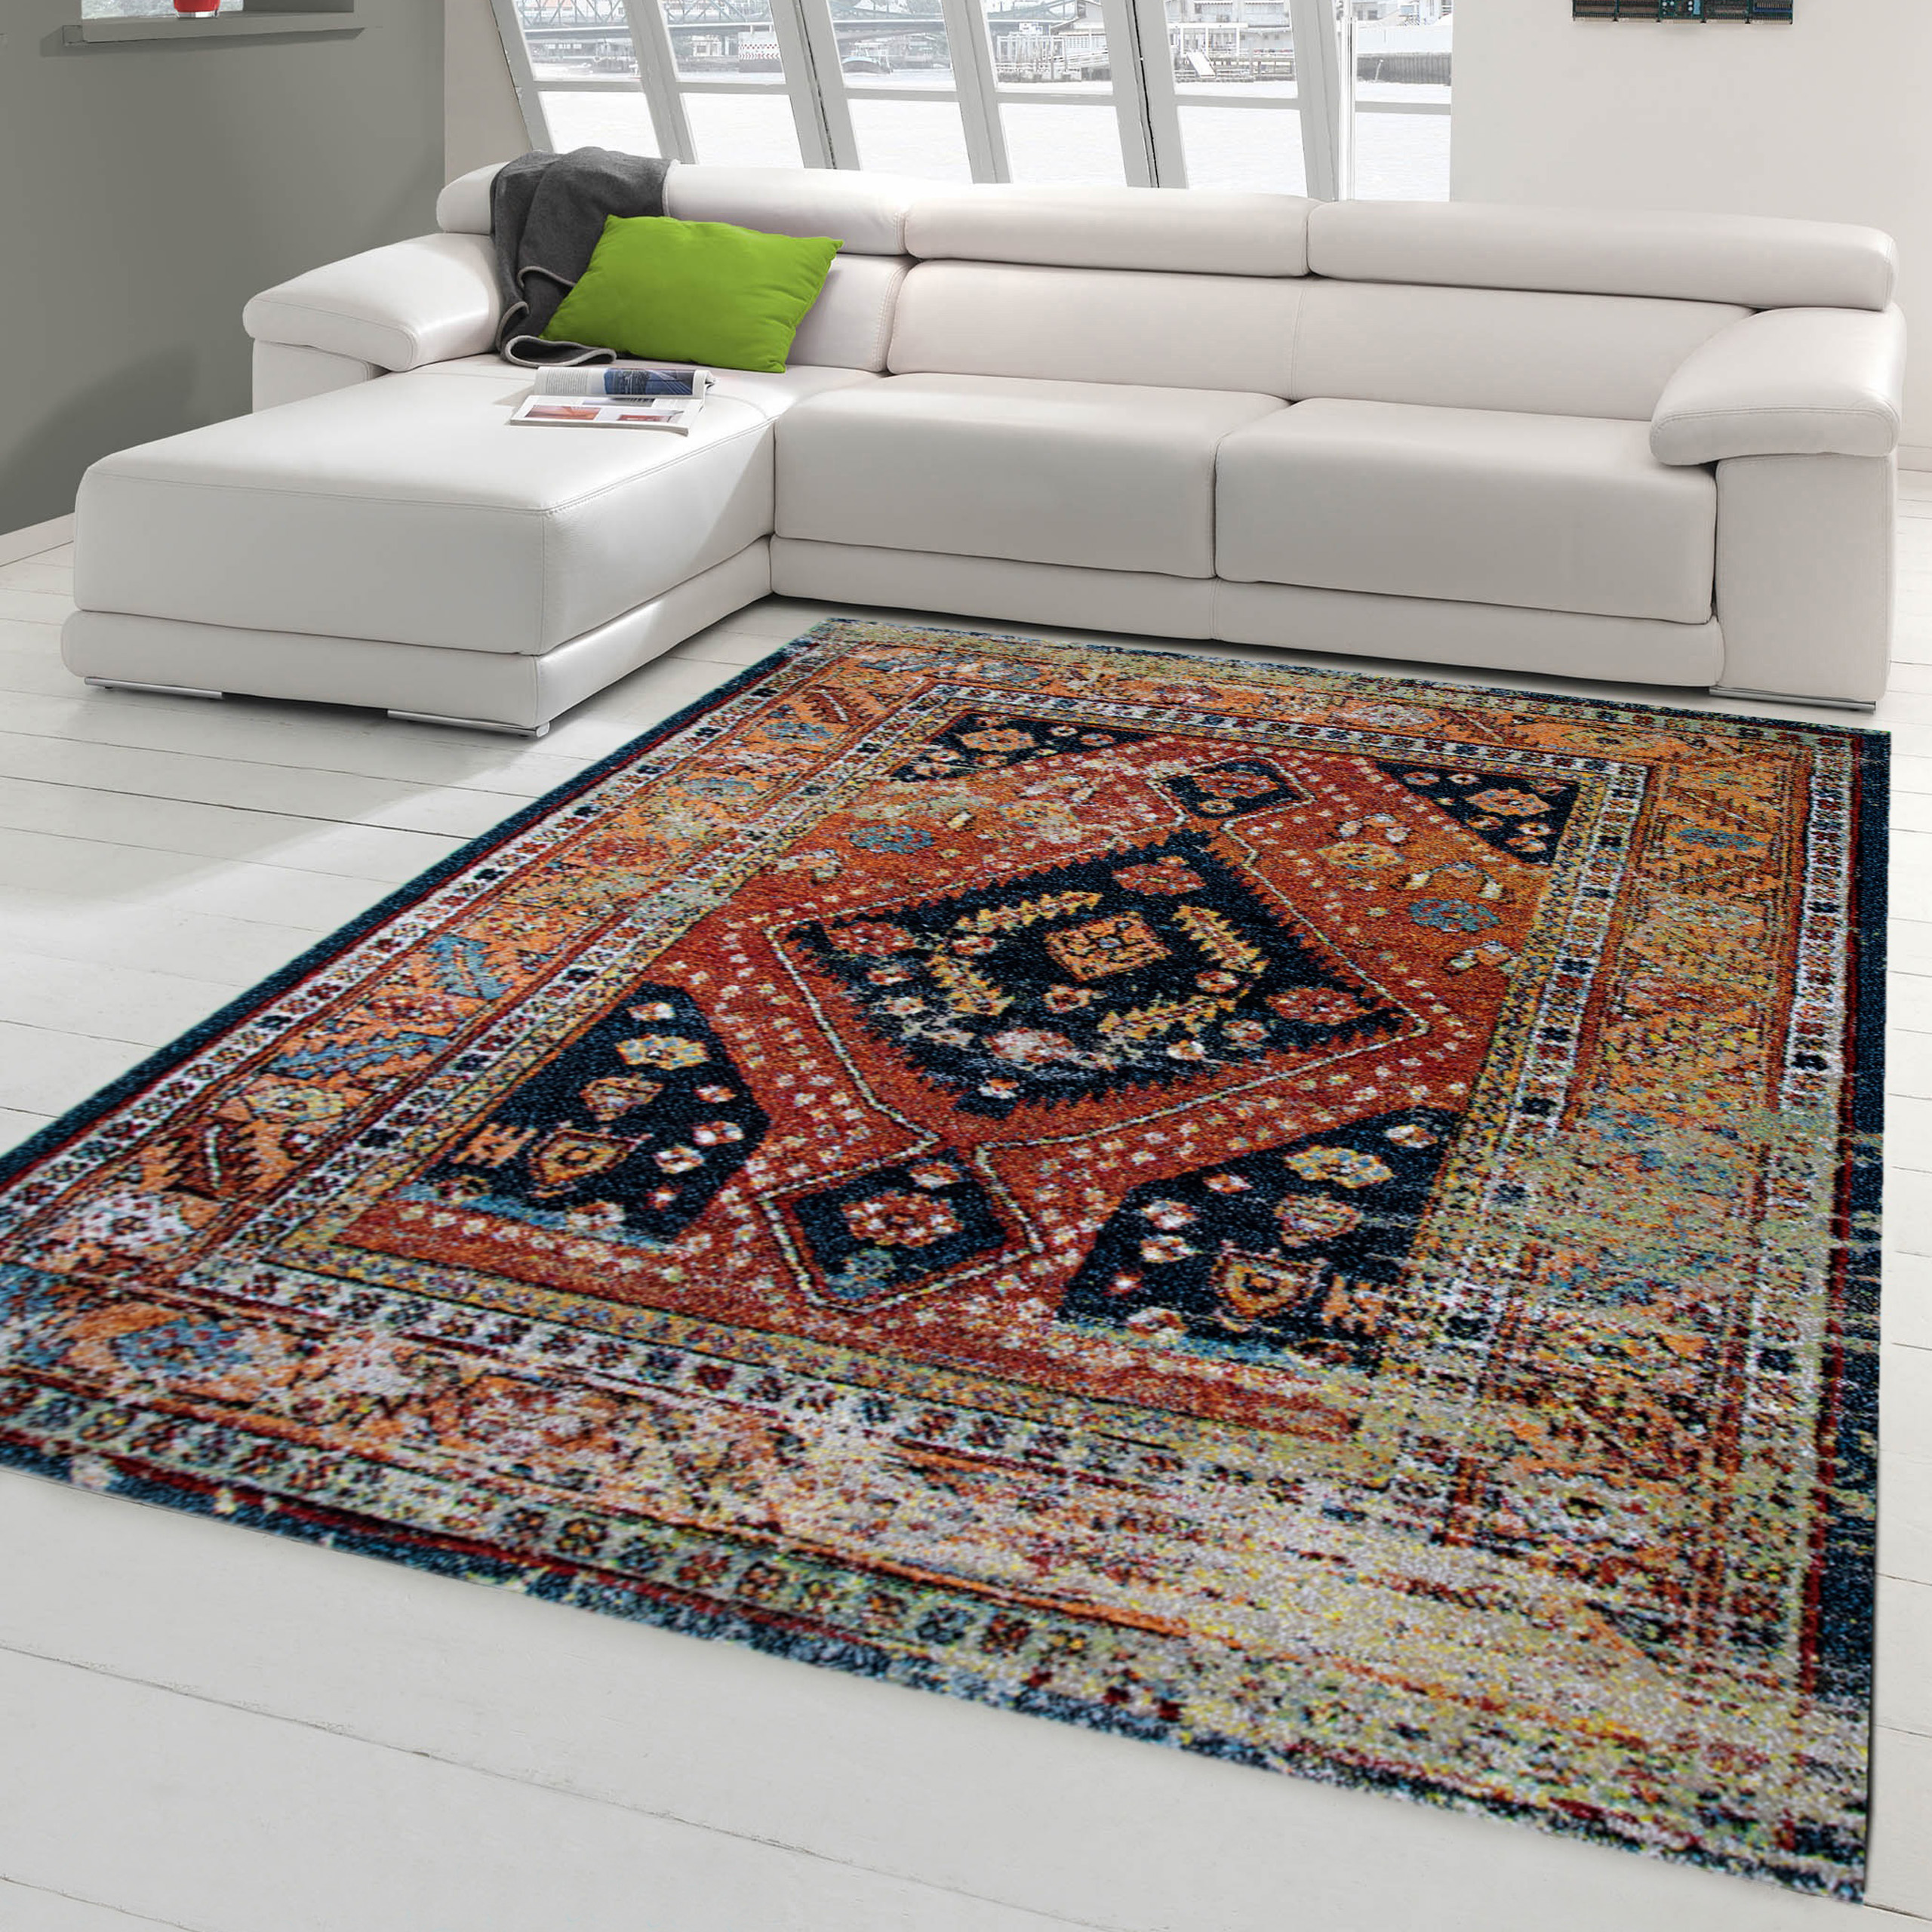 Modern & designer carpets: High-quality -Traum carpet Teppich - at dreams and cheap